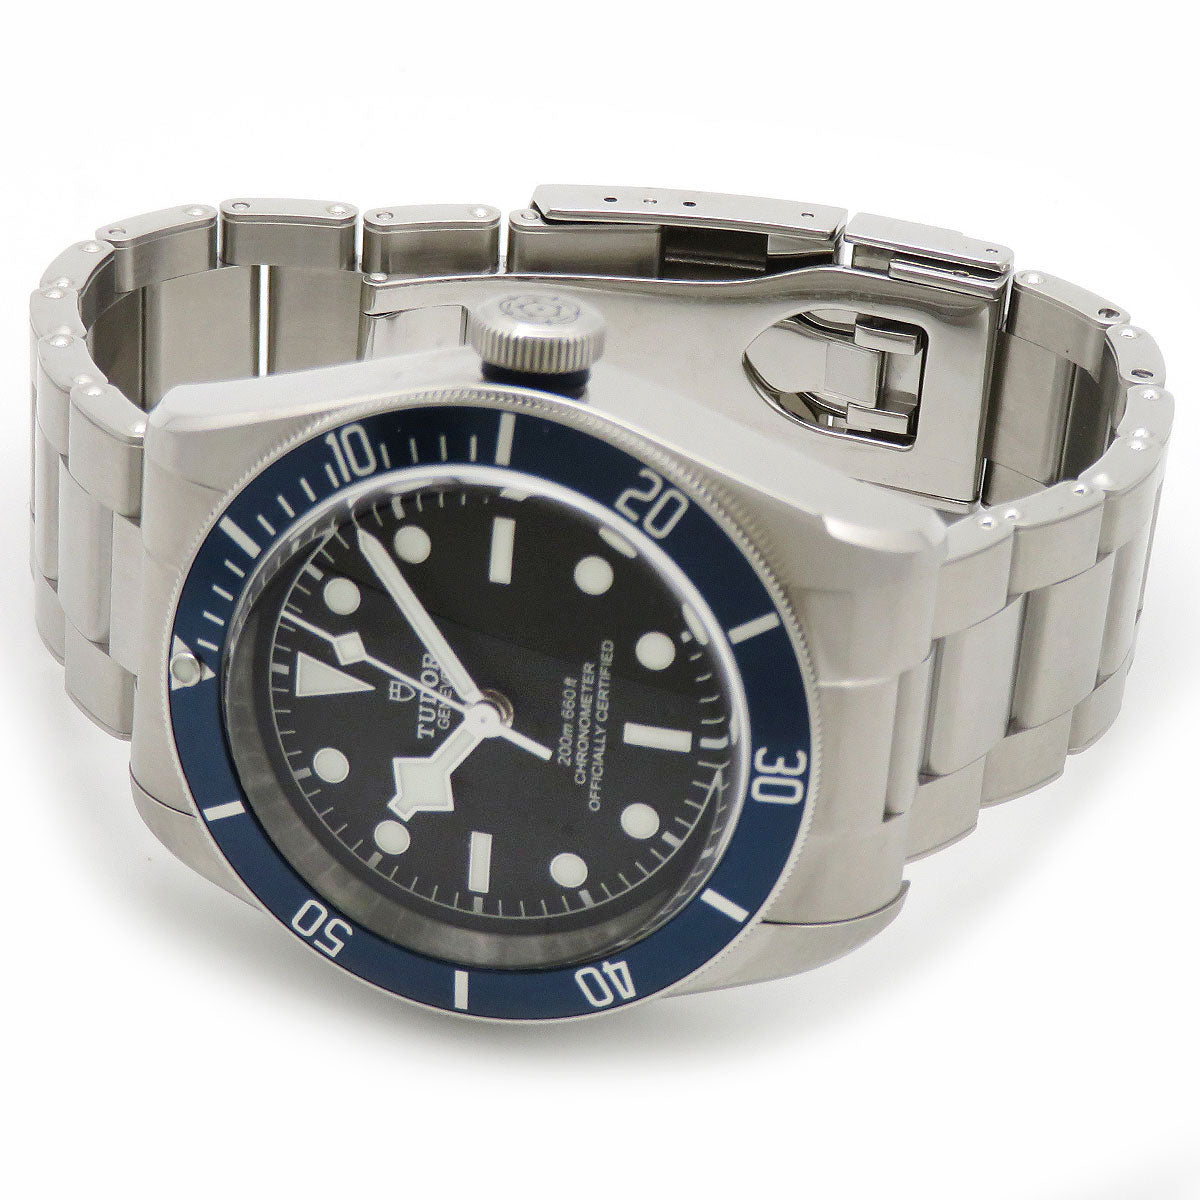 Automatic Heritage Black Bay Wrist Watch 79230B